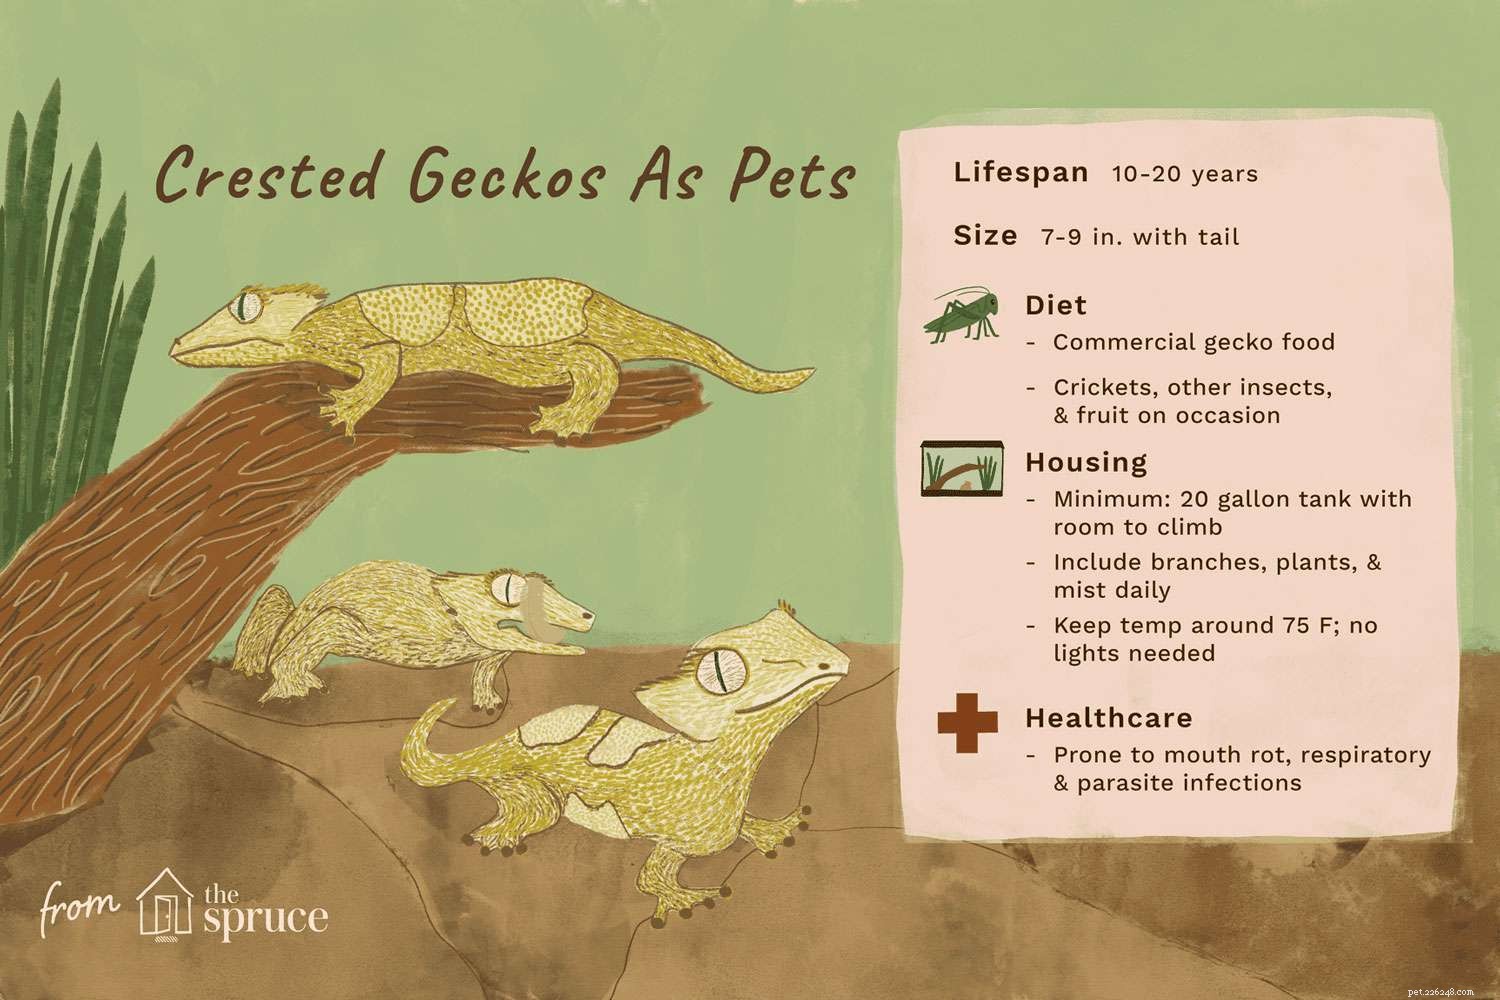 Gekon chocholatý:Profil druhu